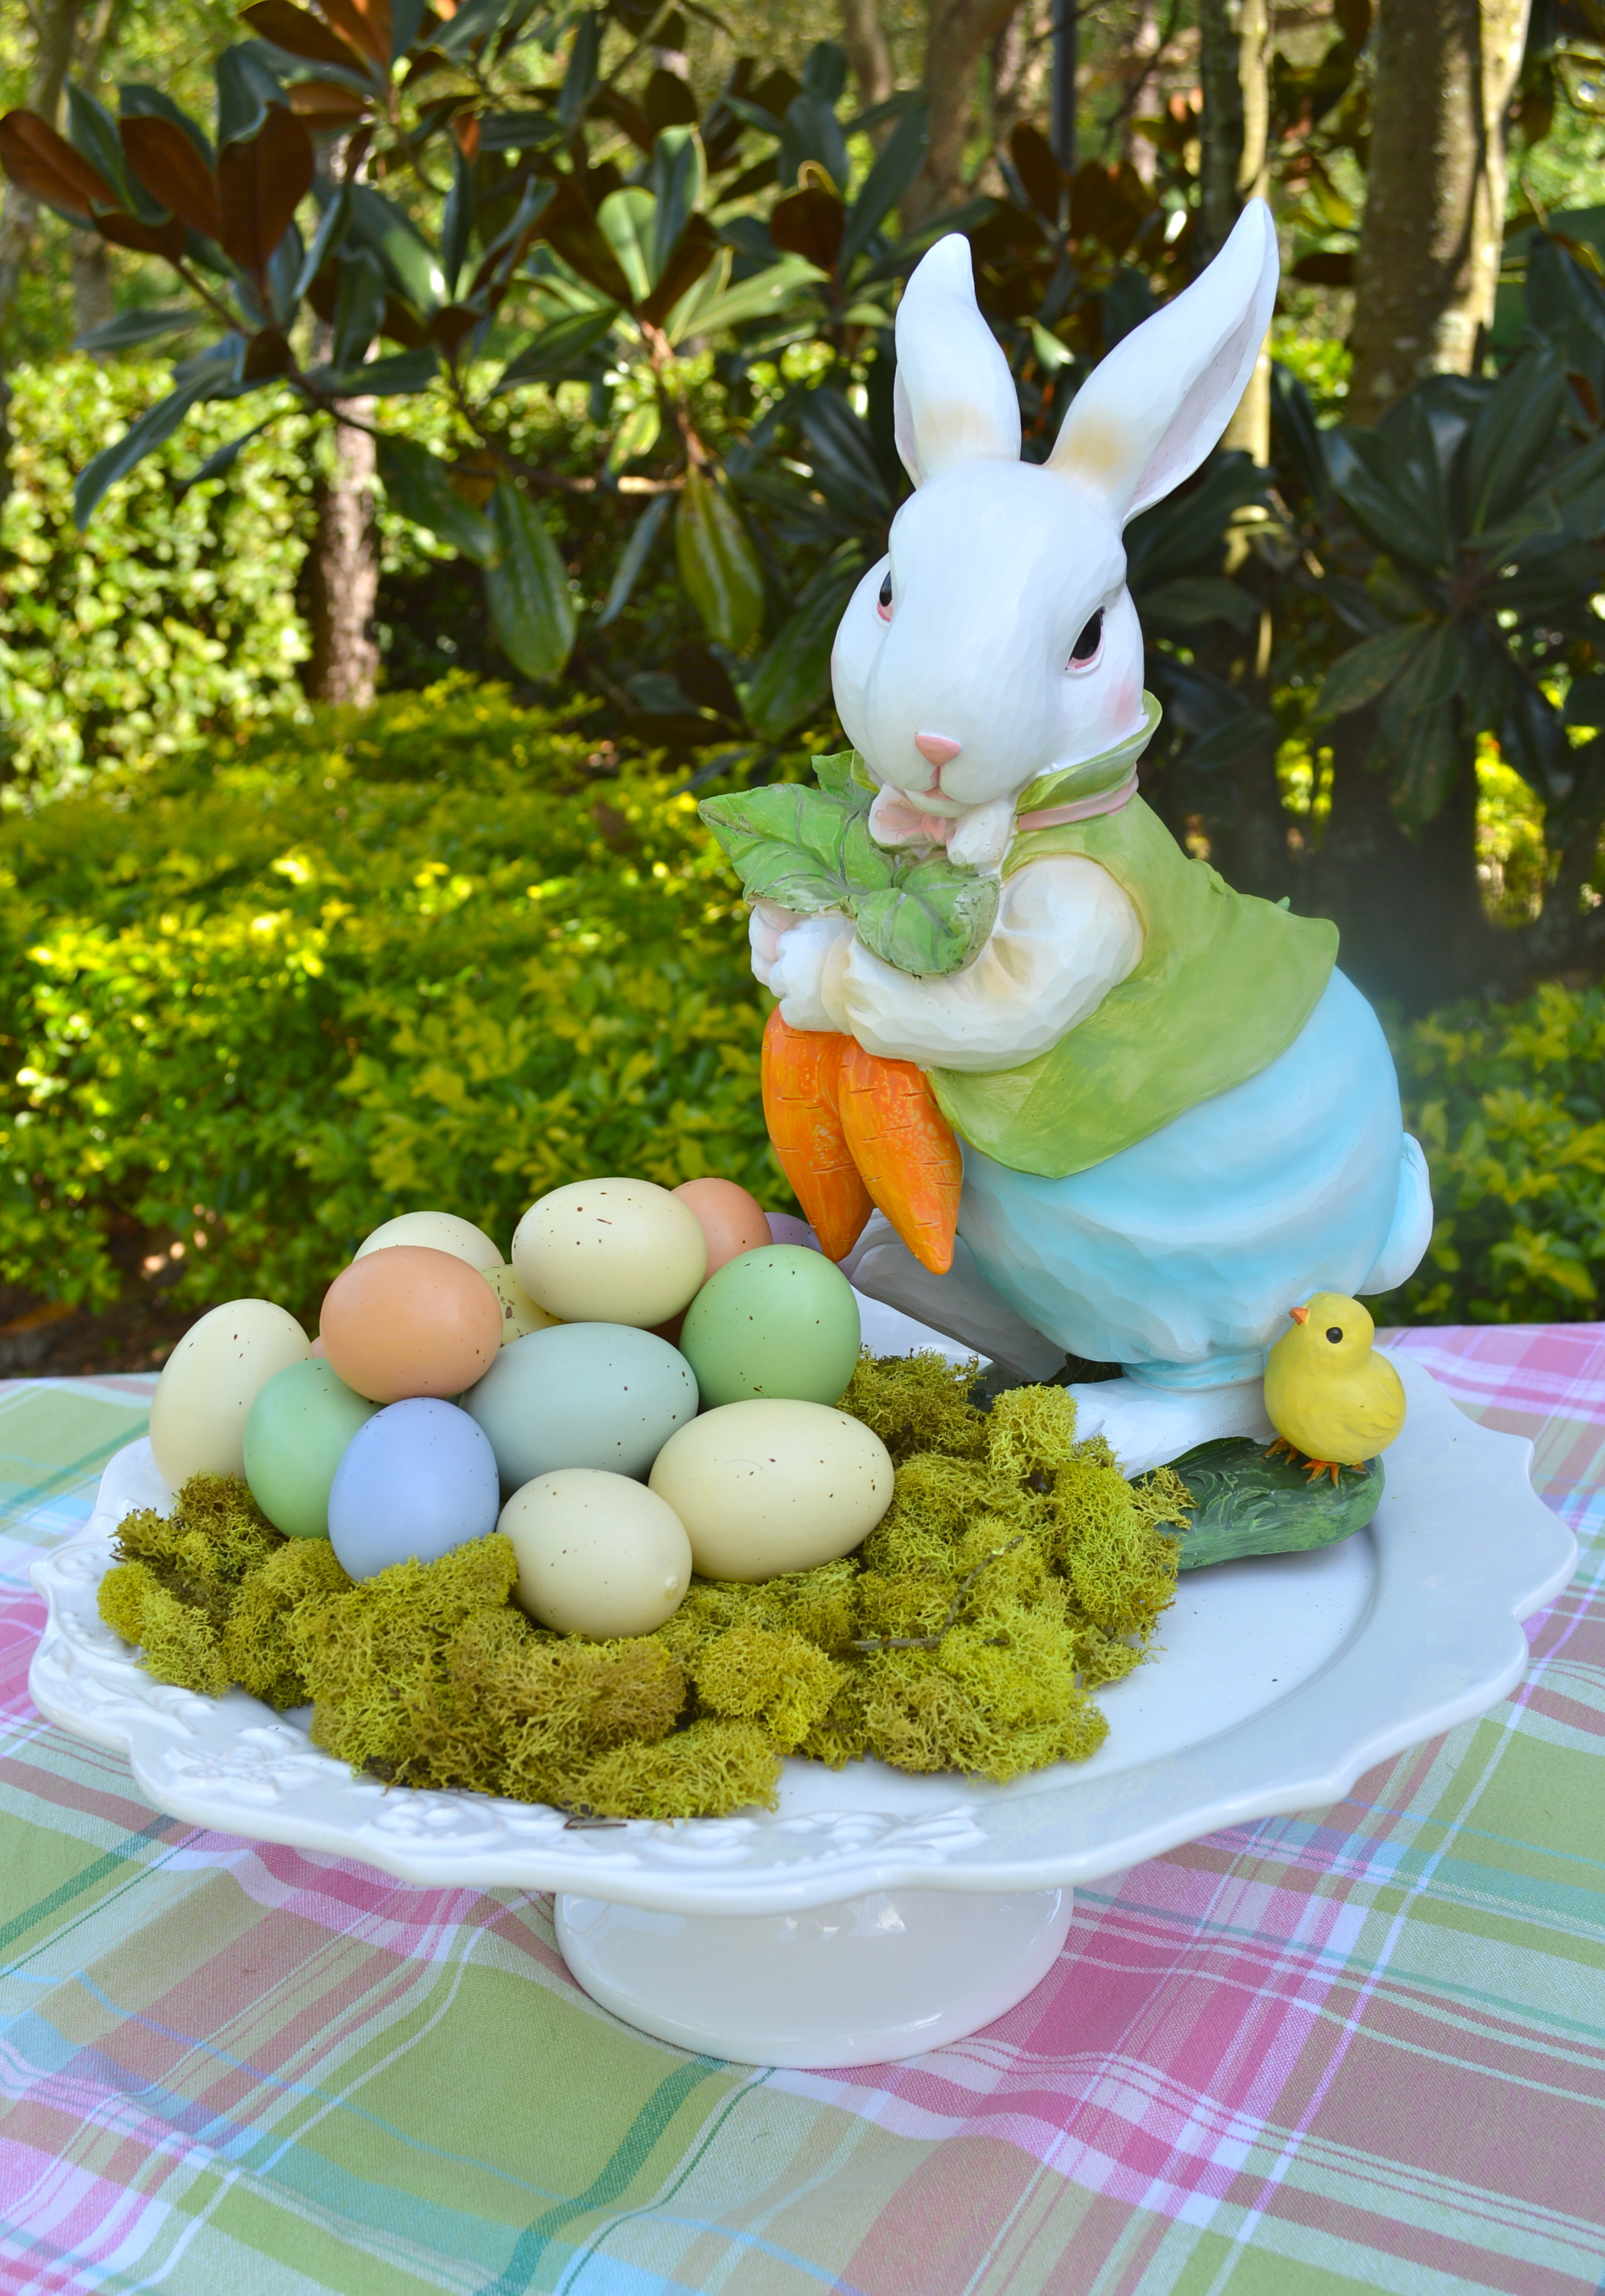 Chloe’s Celebrations ~ A Cute Easter Centerpiece